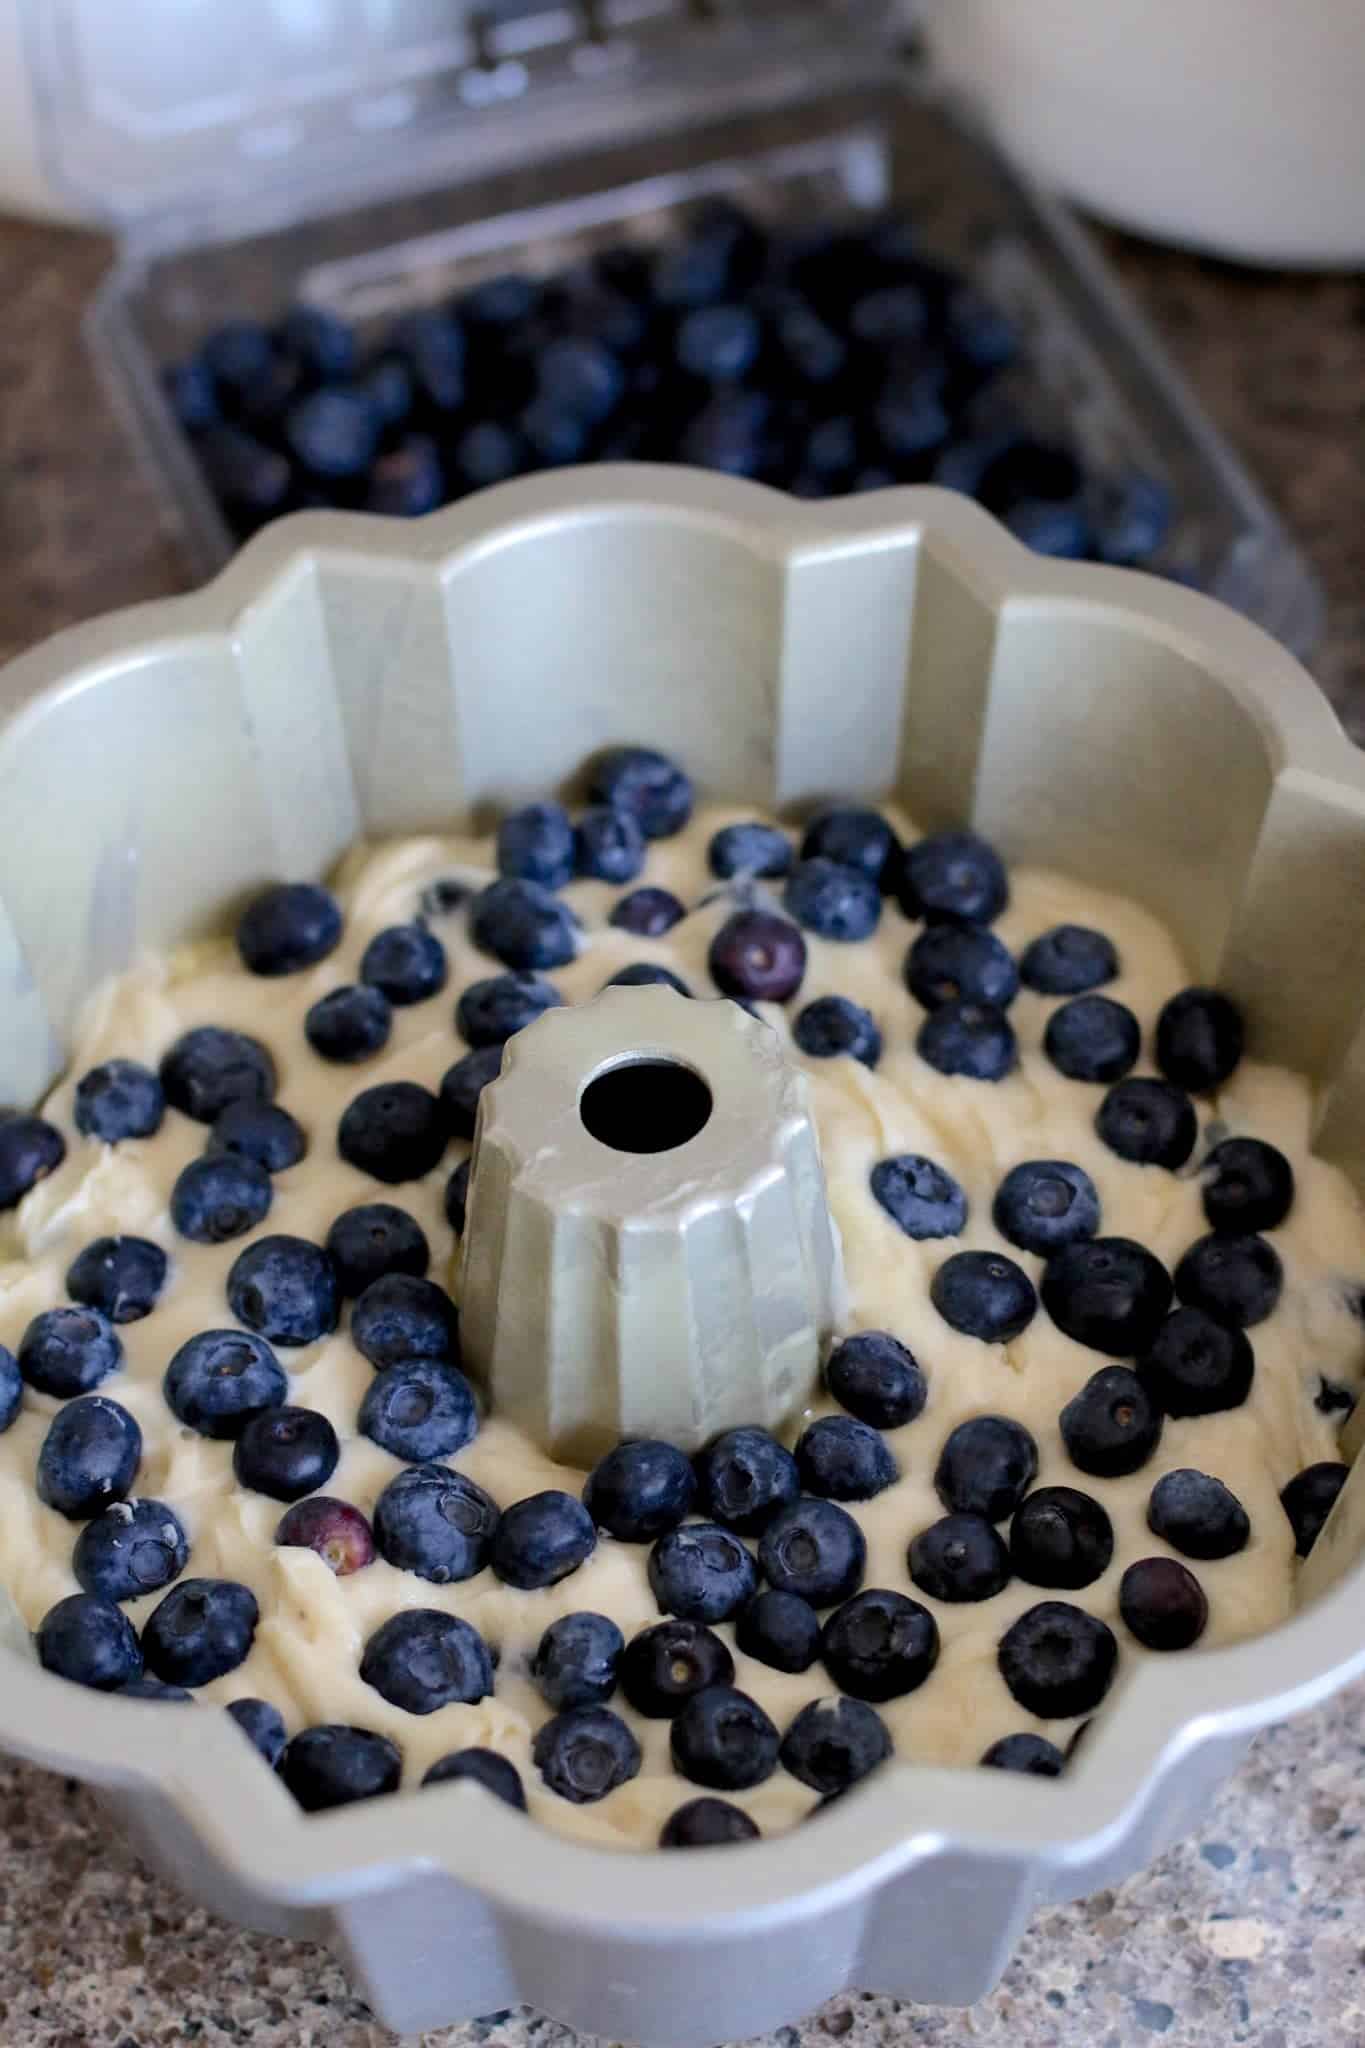 fresh blueberries topped onto homemade cake batter in a Nordicware bundt pan.